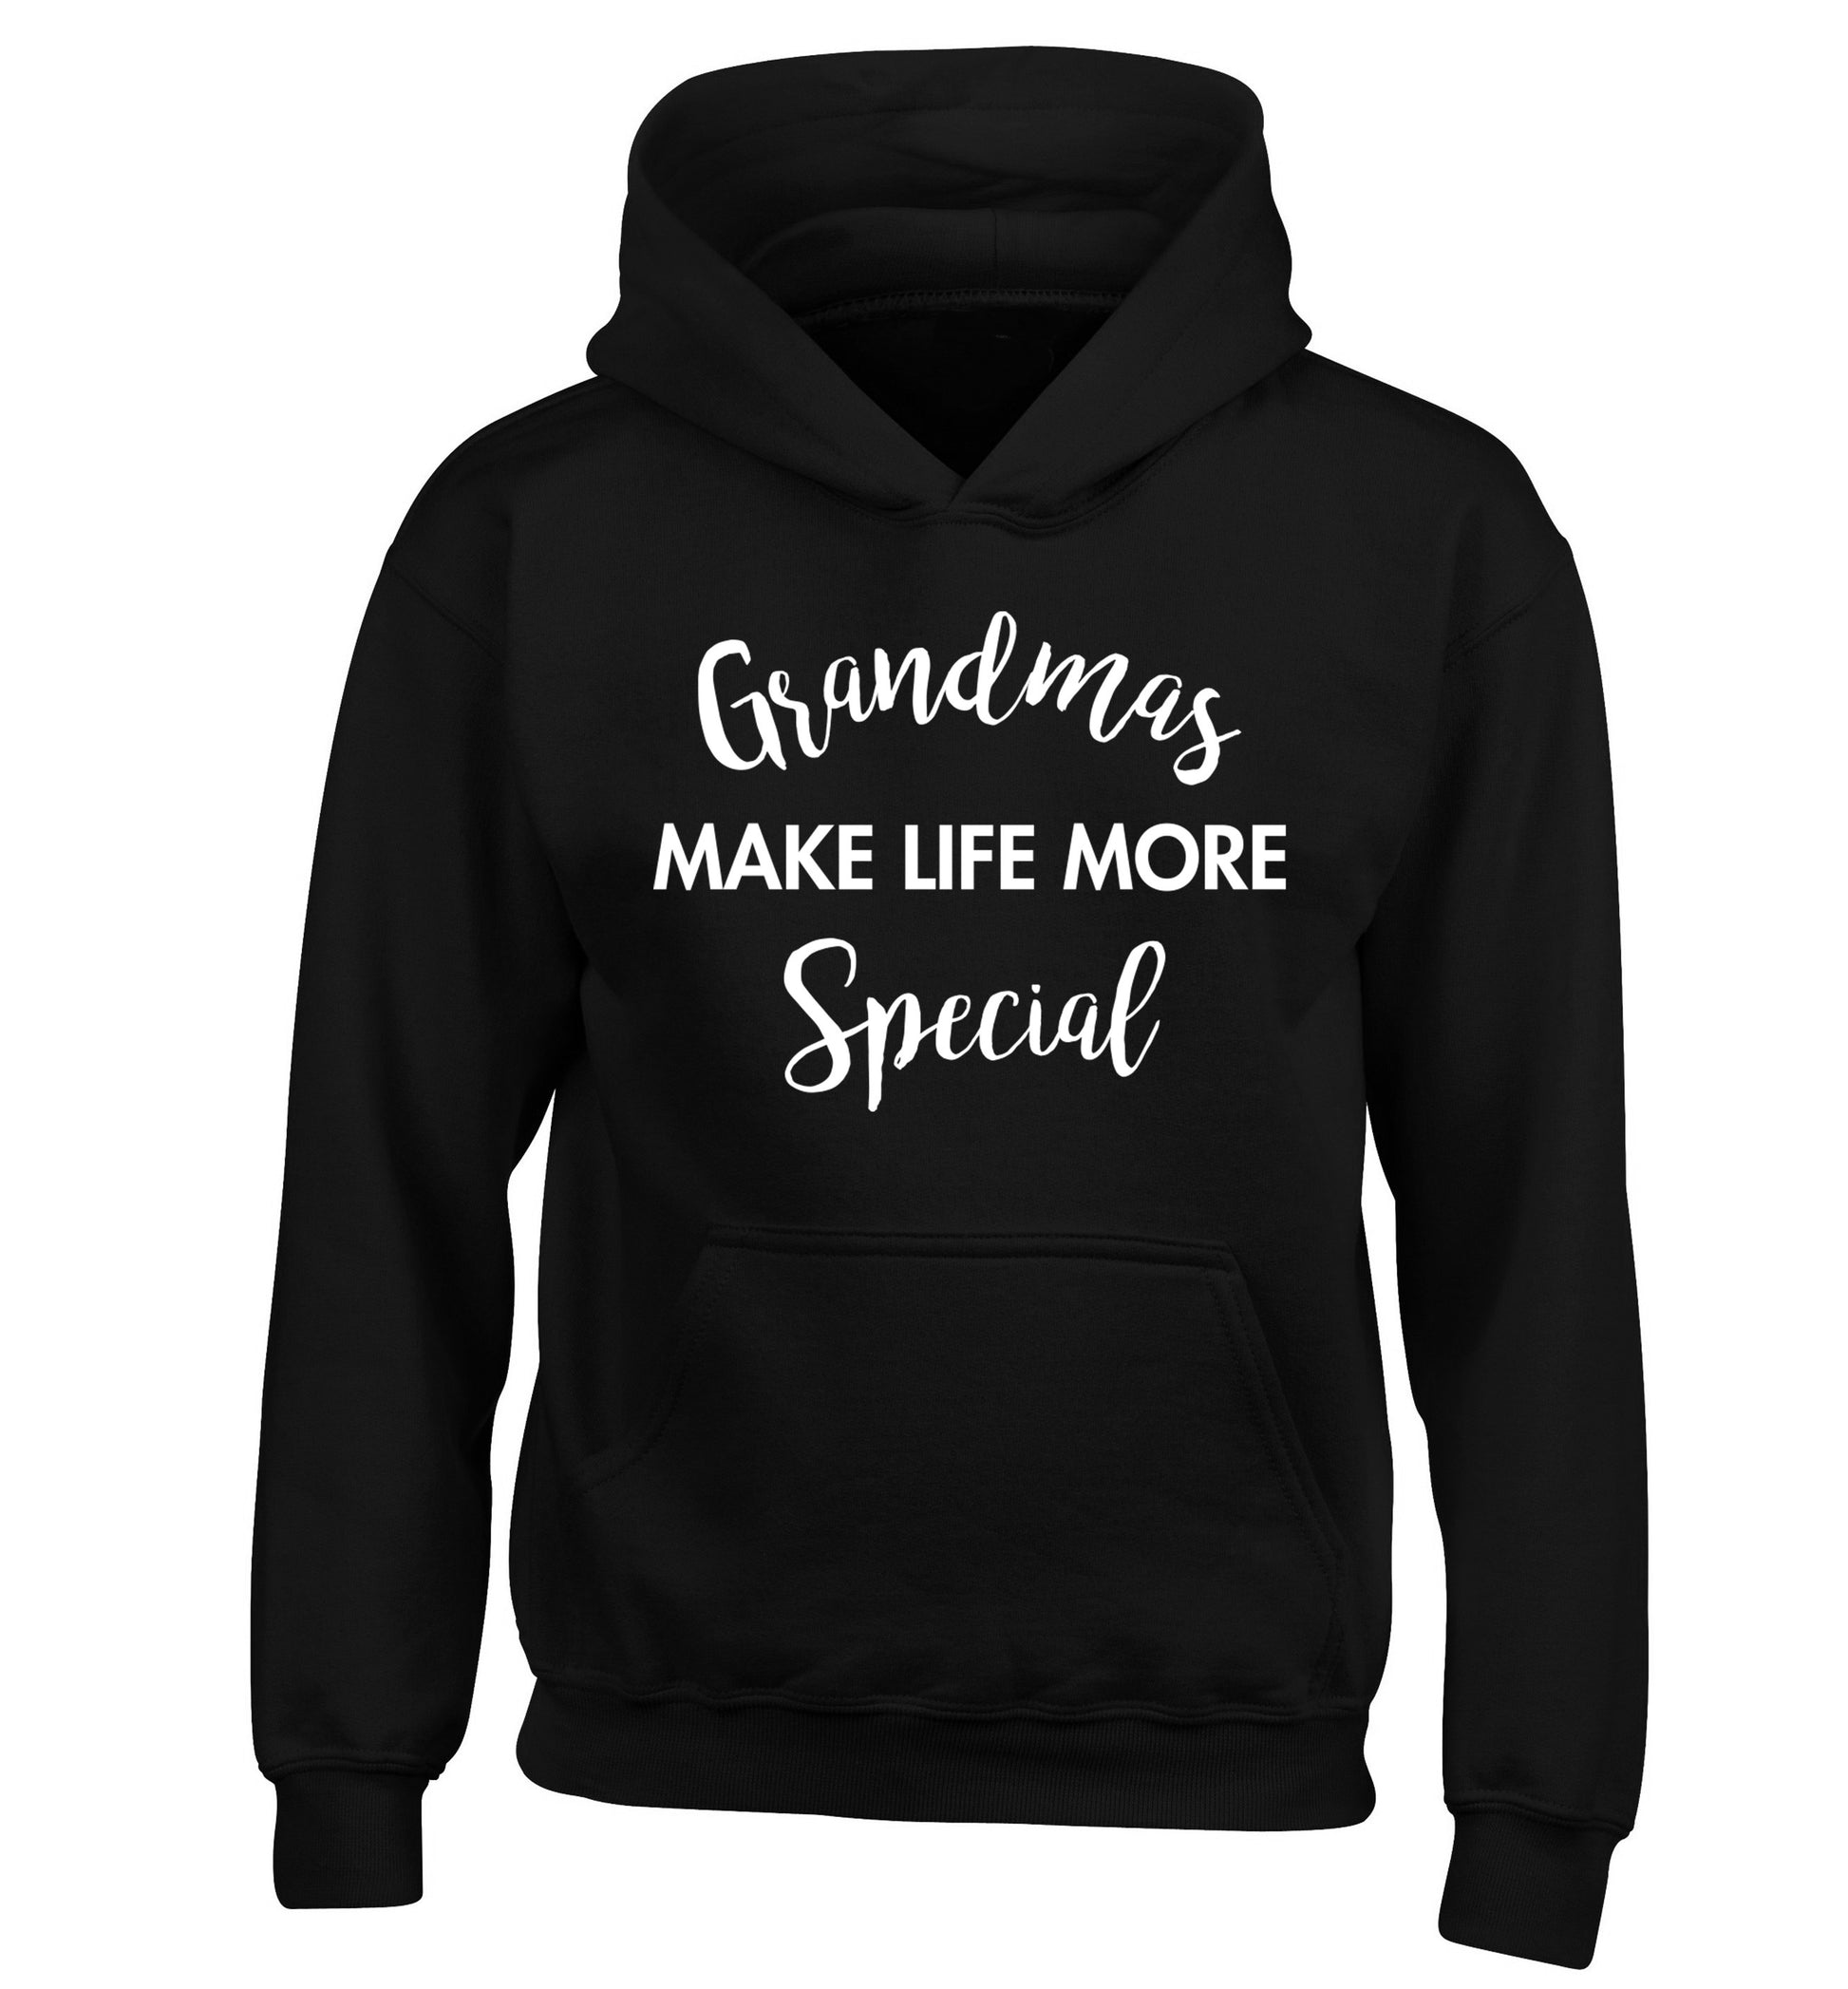 Grandmas make life more special children's black hoodie 12-14 Years